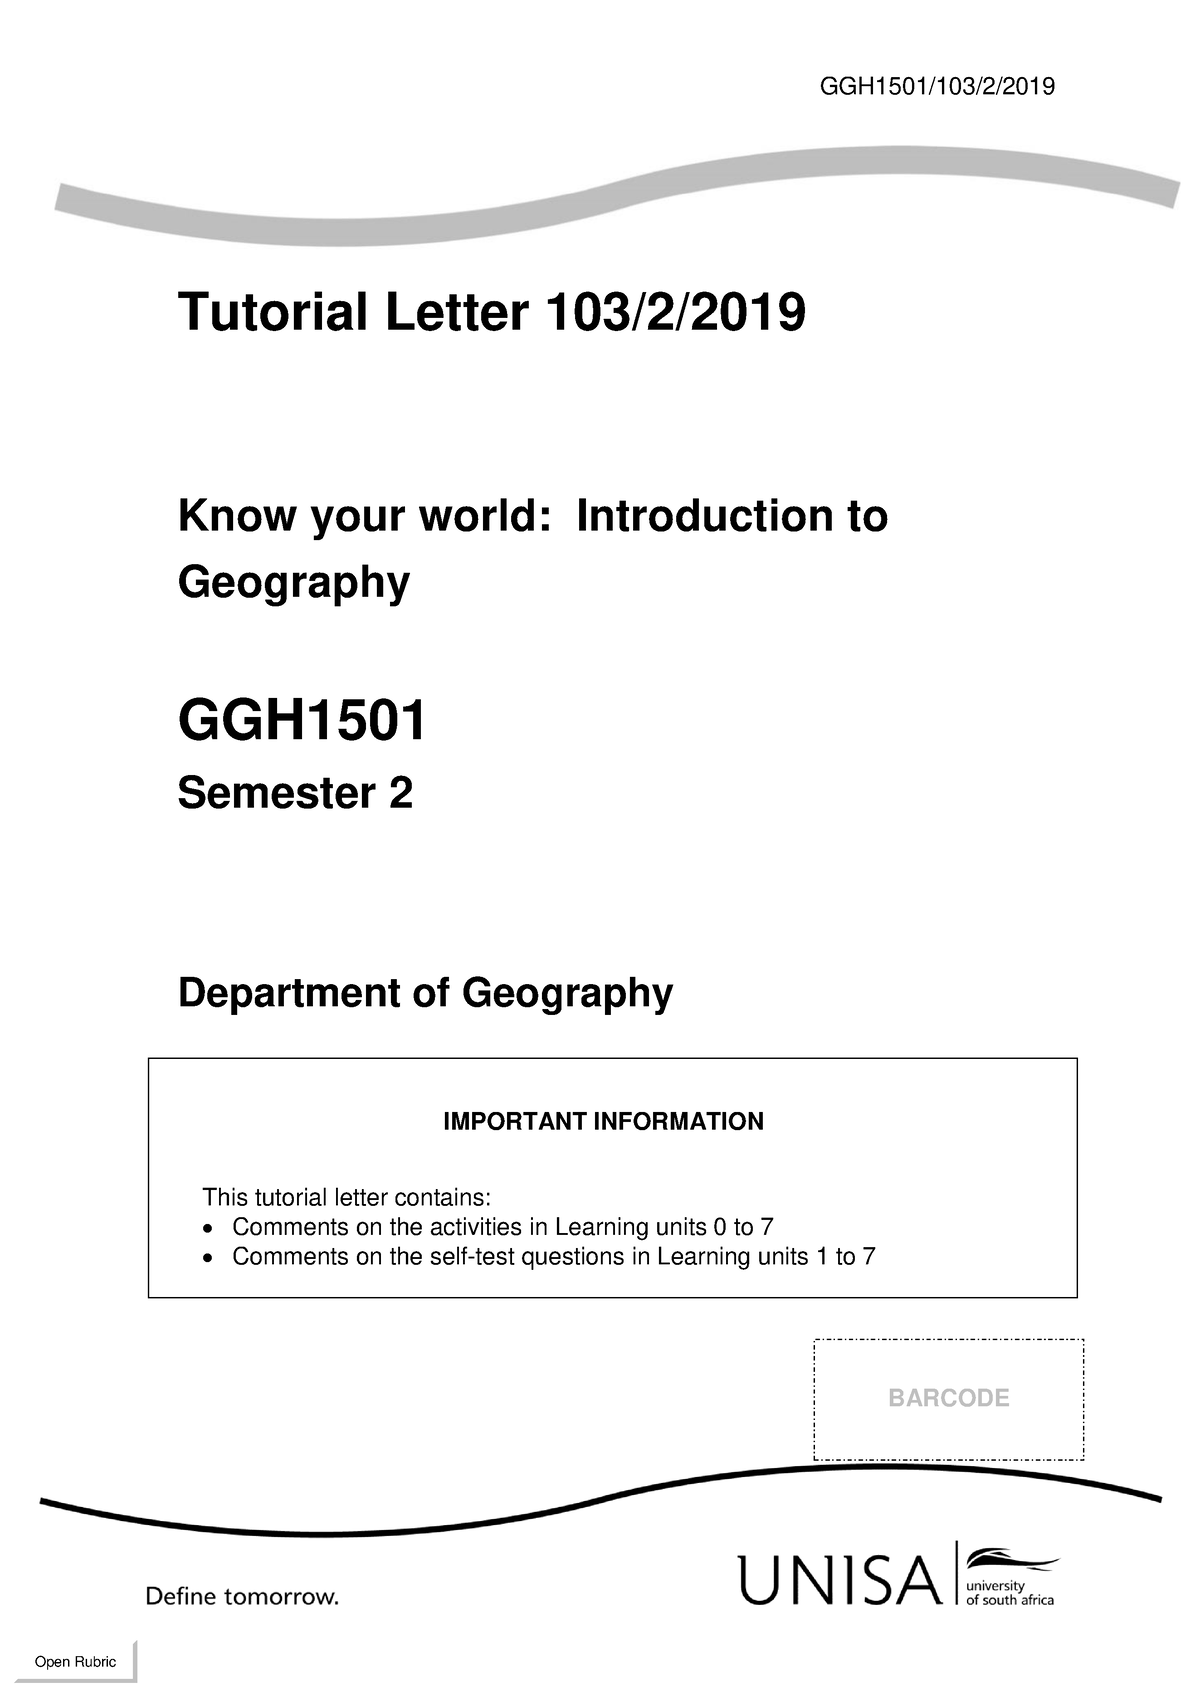 GGH1501 2019 TL 103 2 B - notes - GGH1501/103/2/ Tutorial Letter 103/2 ...